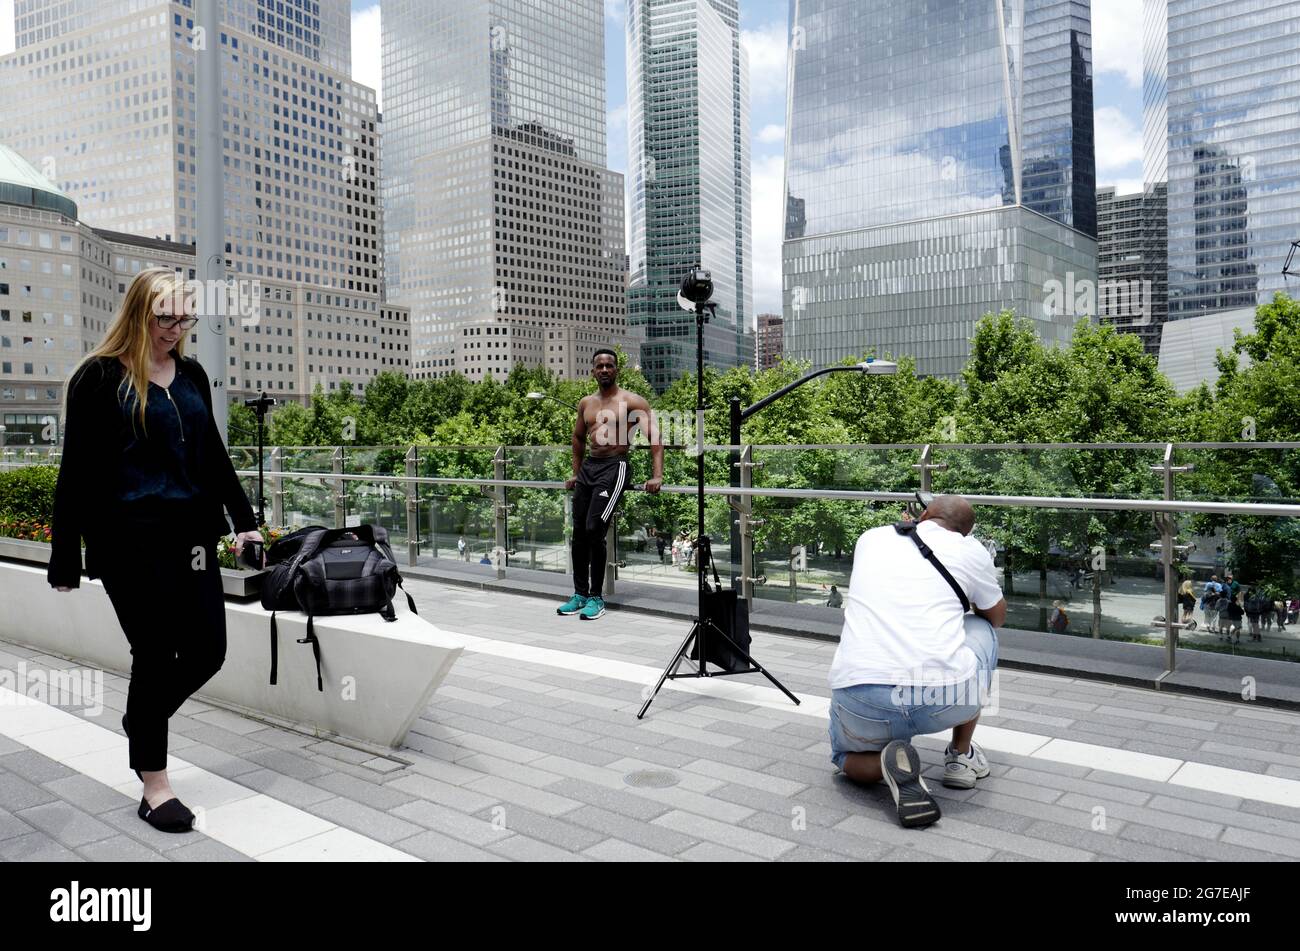 Fotoshooting im Freien am 9/11 Memorial in Manhattan, in New York City. Stockfoto